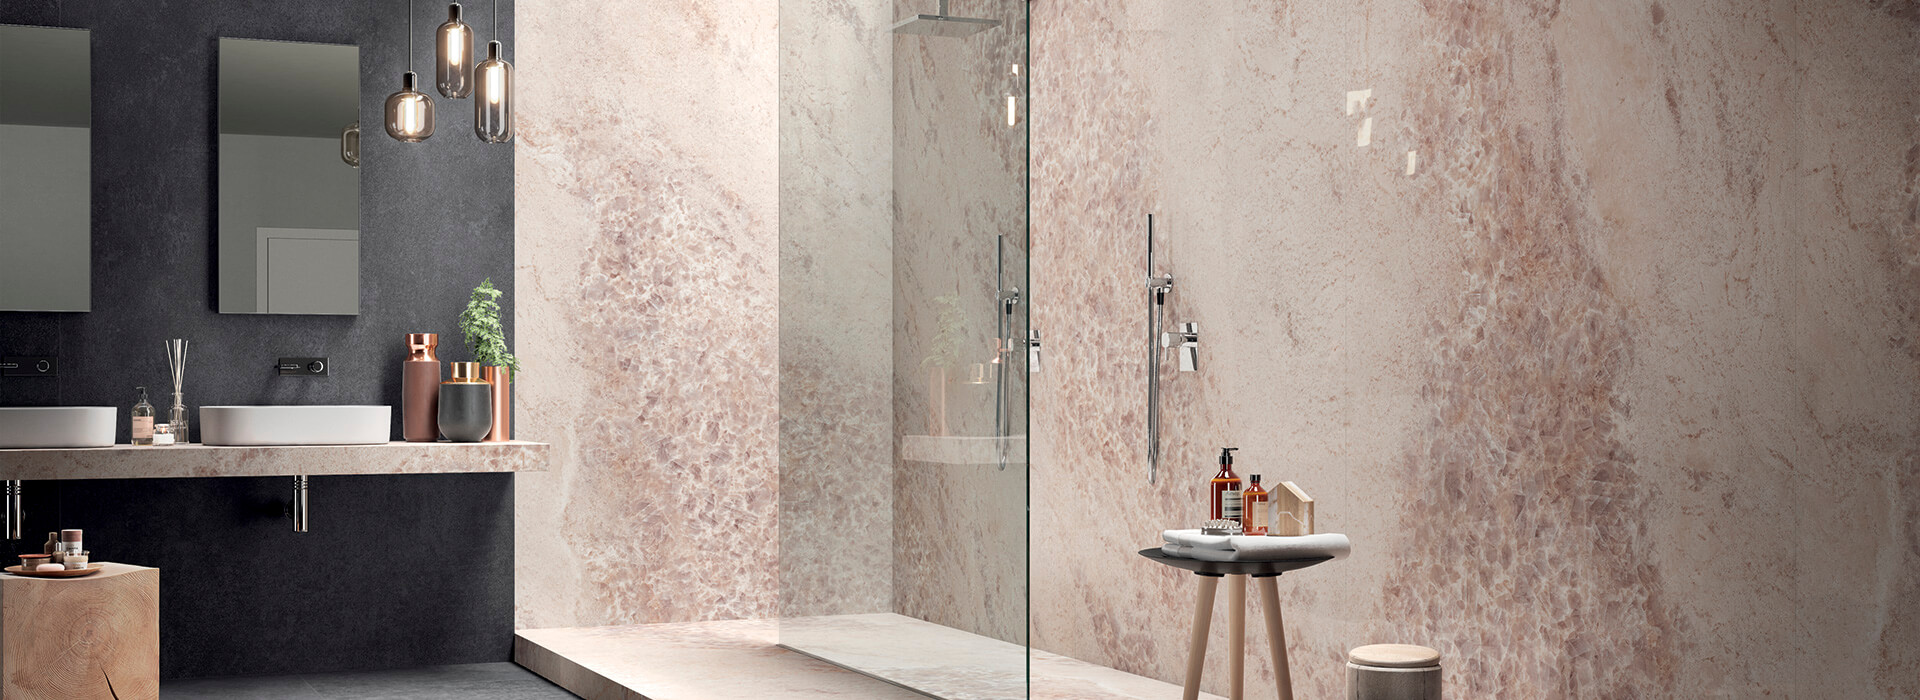 Koupelna s keramickým obkladem Gemstone v designu rose